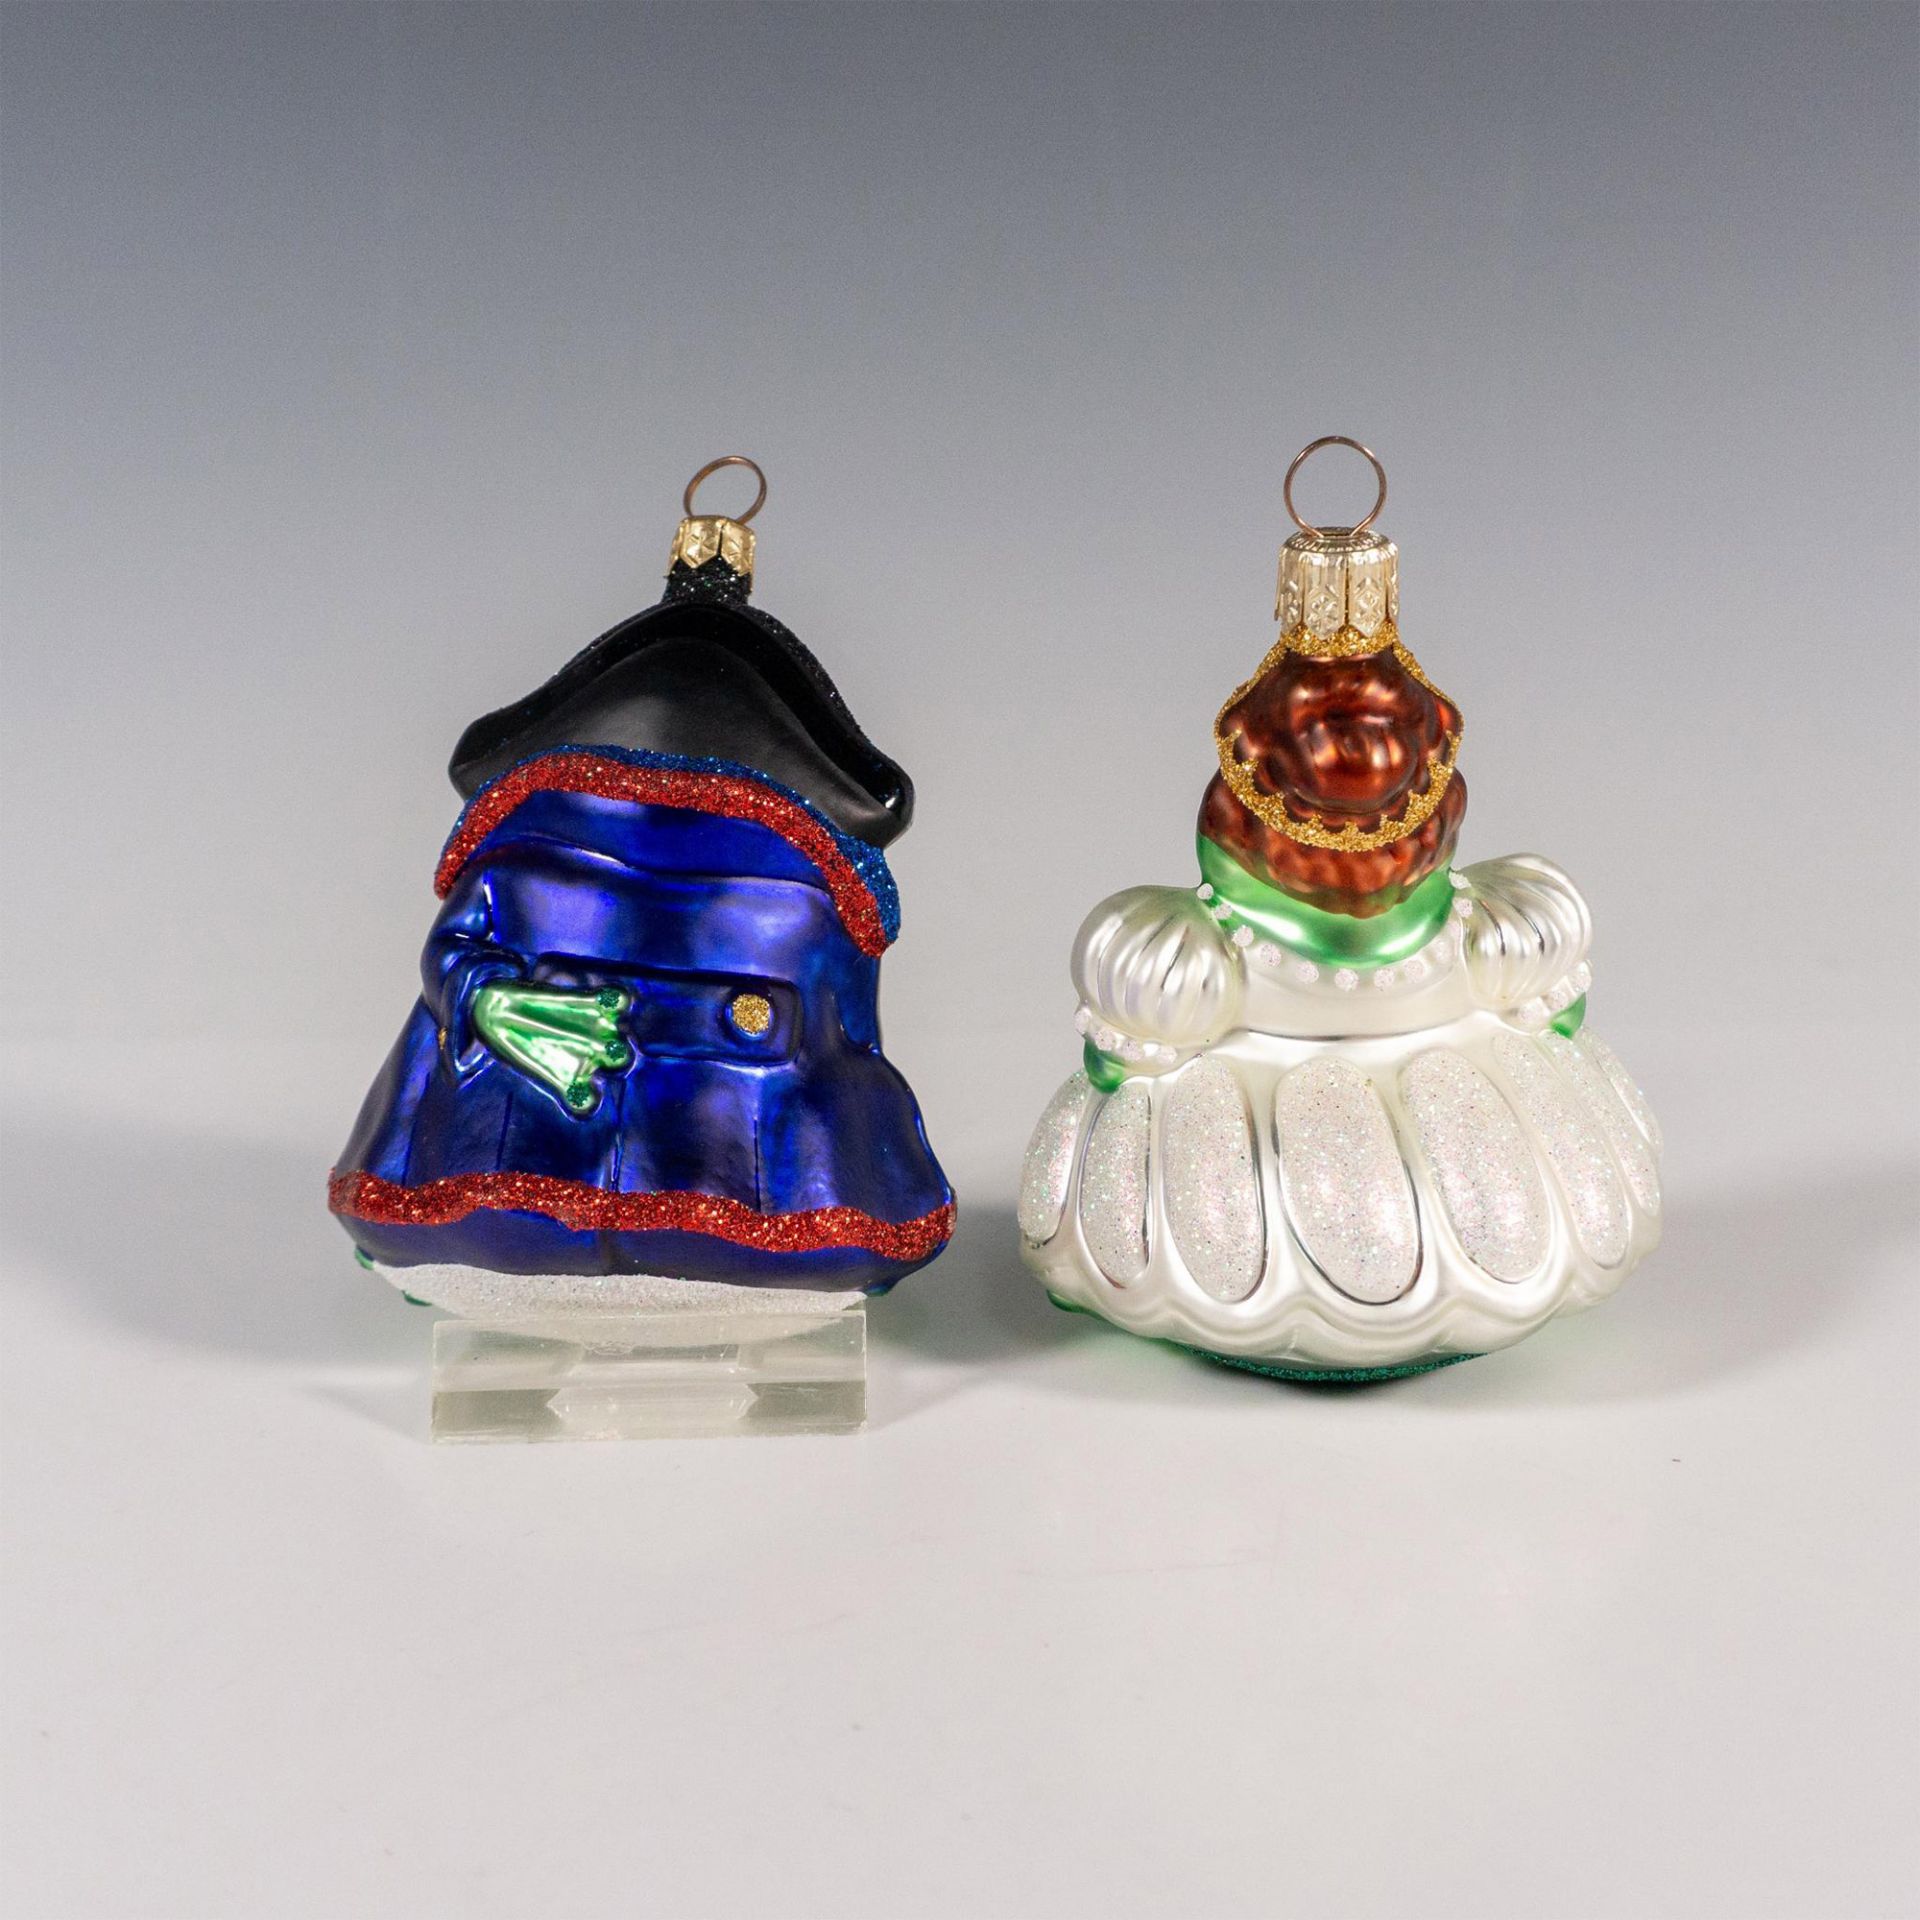 2pc Patricia Breen Frog Ornaments, Josephine and Napoleon - Image 2 of 3